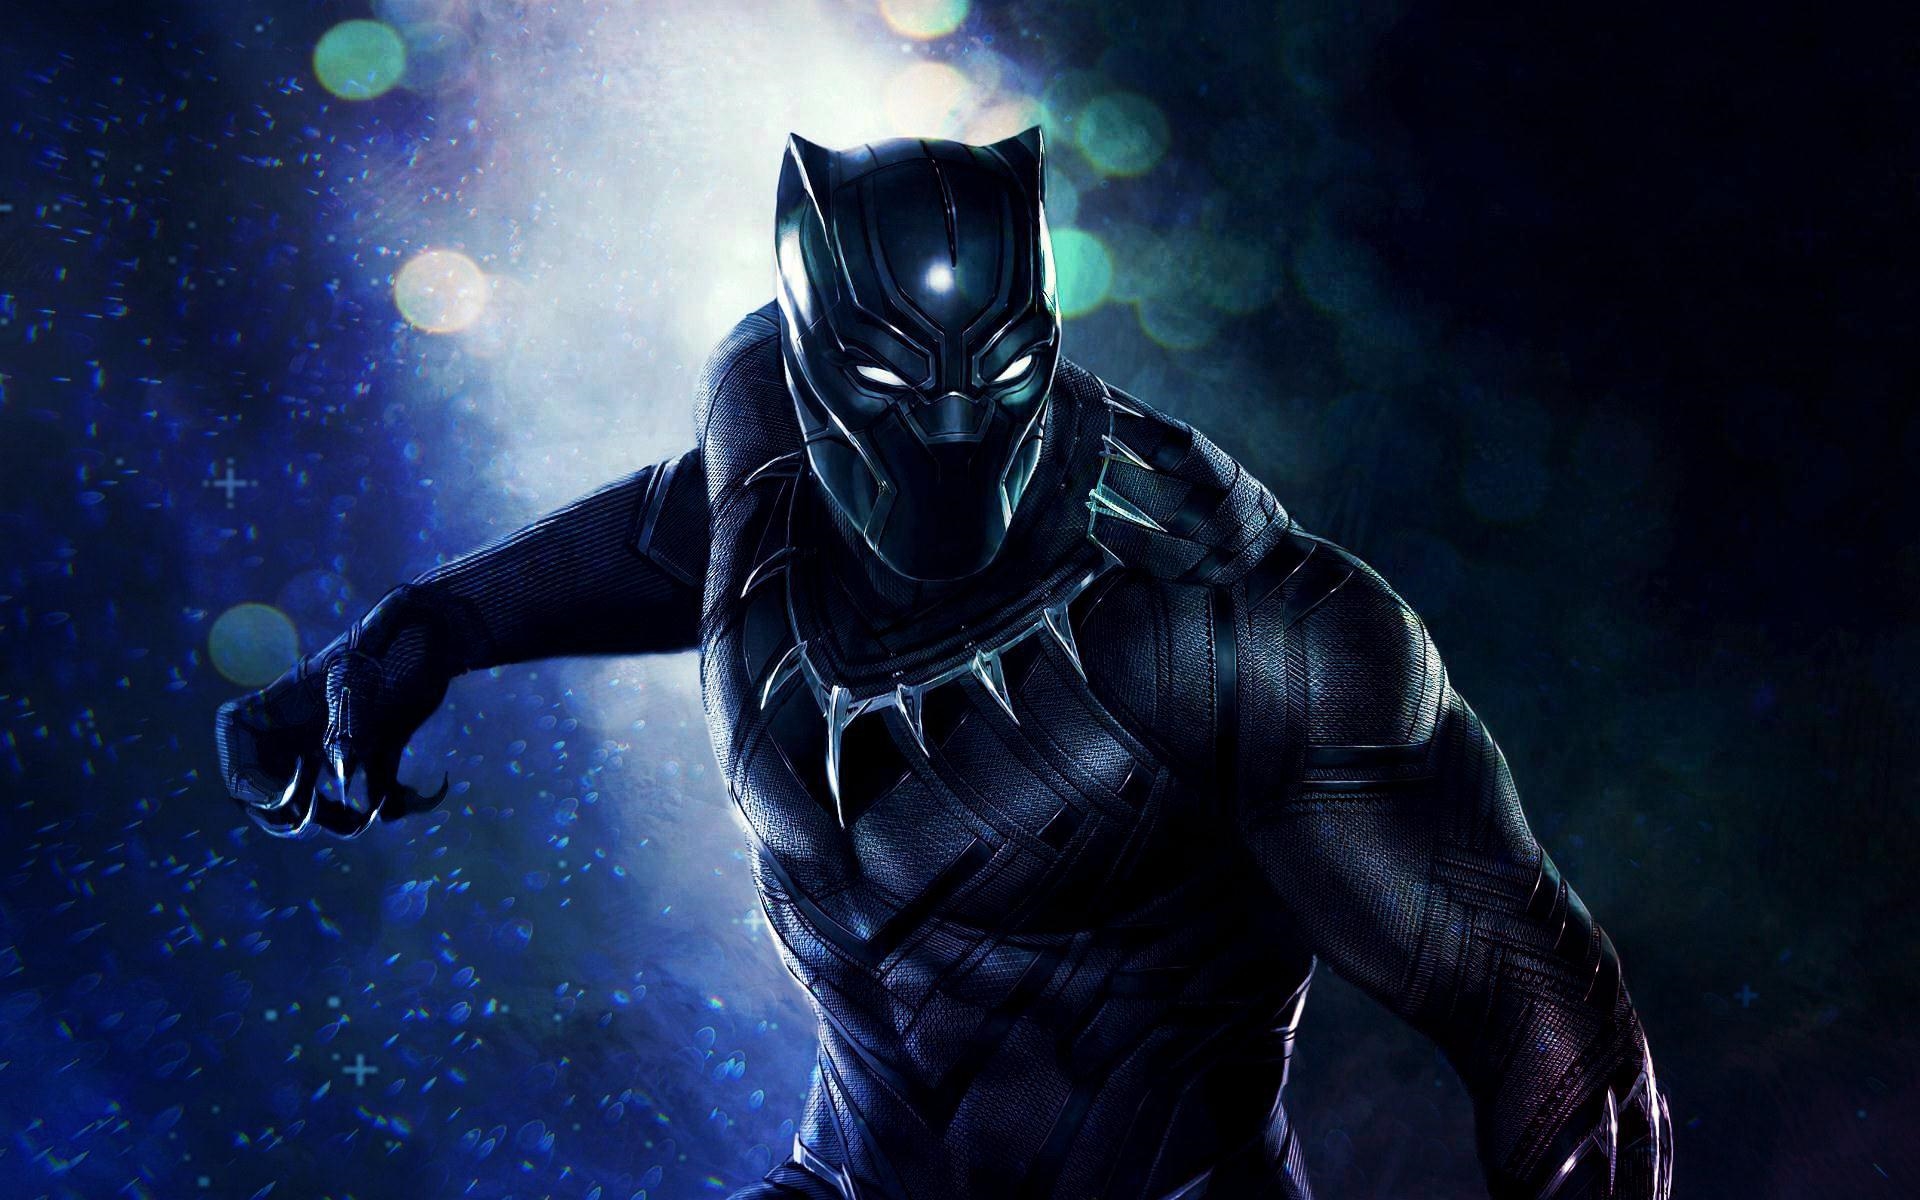 46+] Marvel Black Panther Wallpaper Desktop - WallpaperSafari